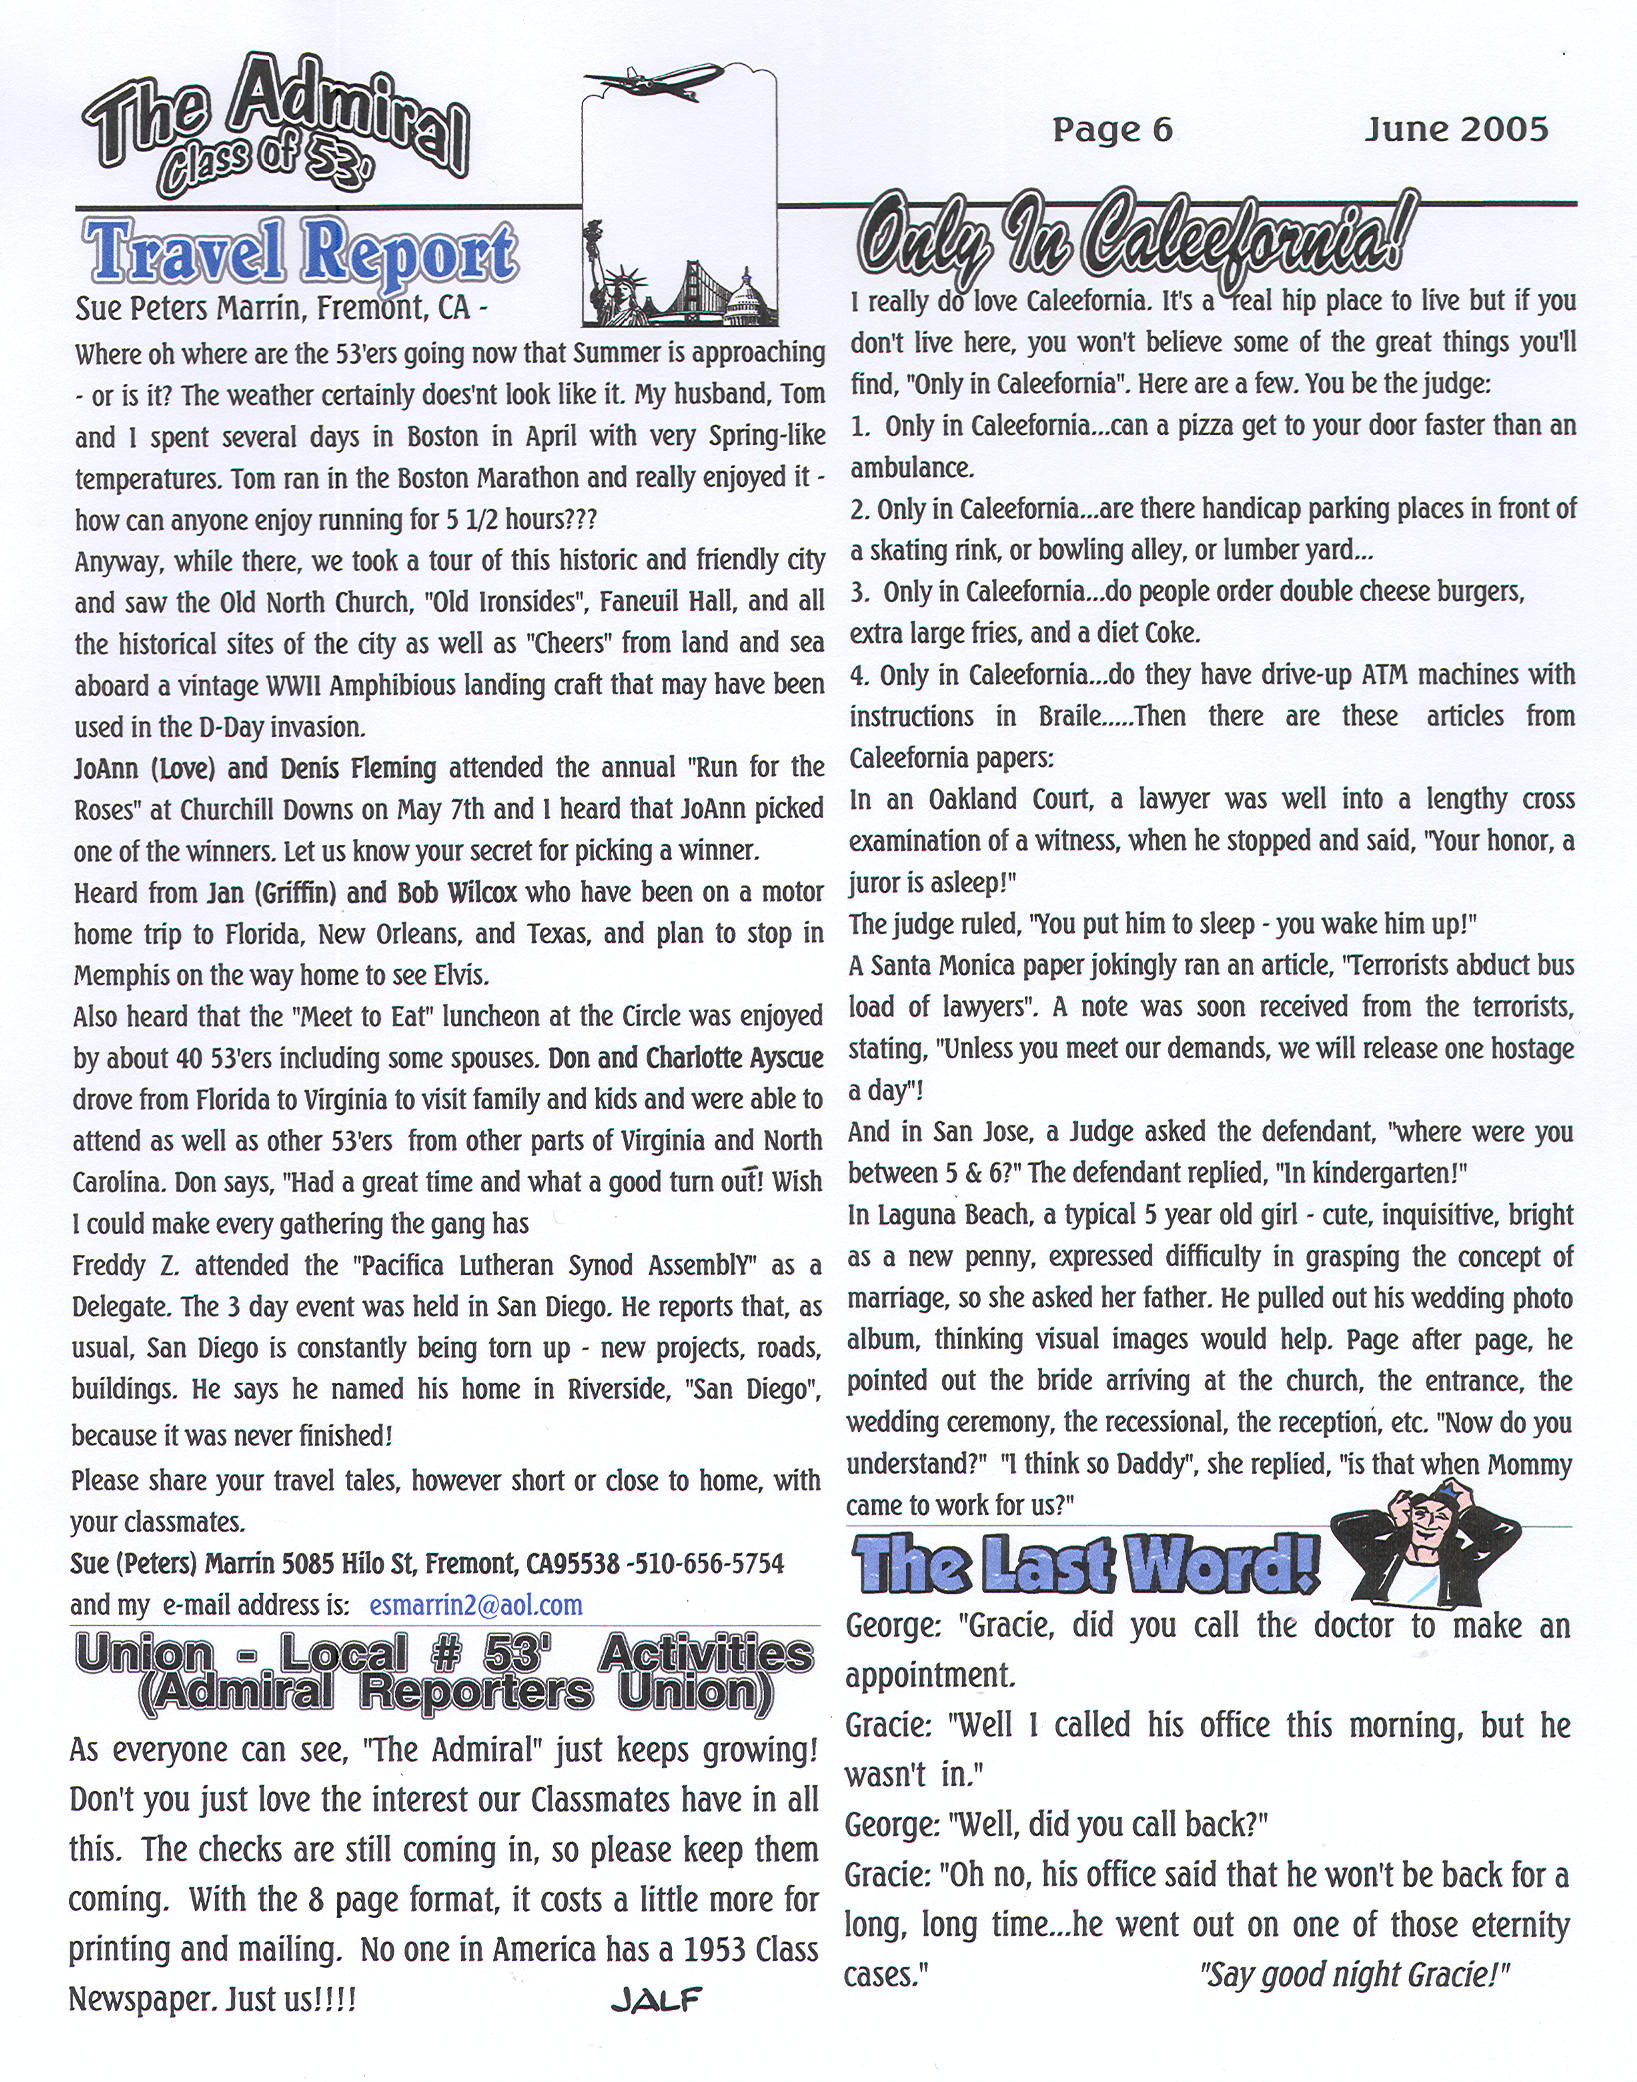 The Admiral - Jun 2005 - pg. 6